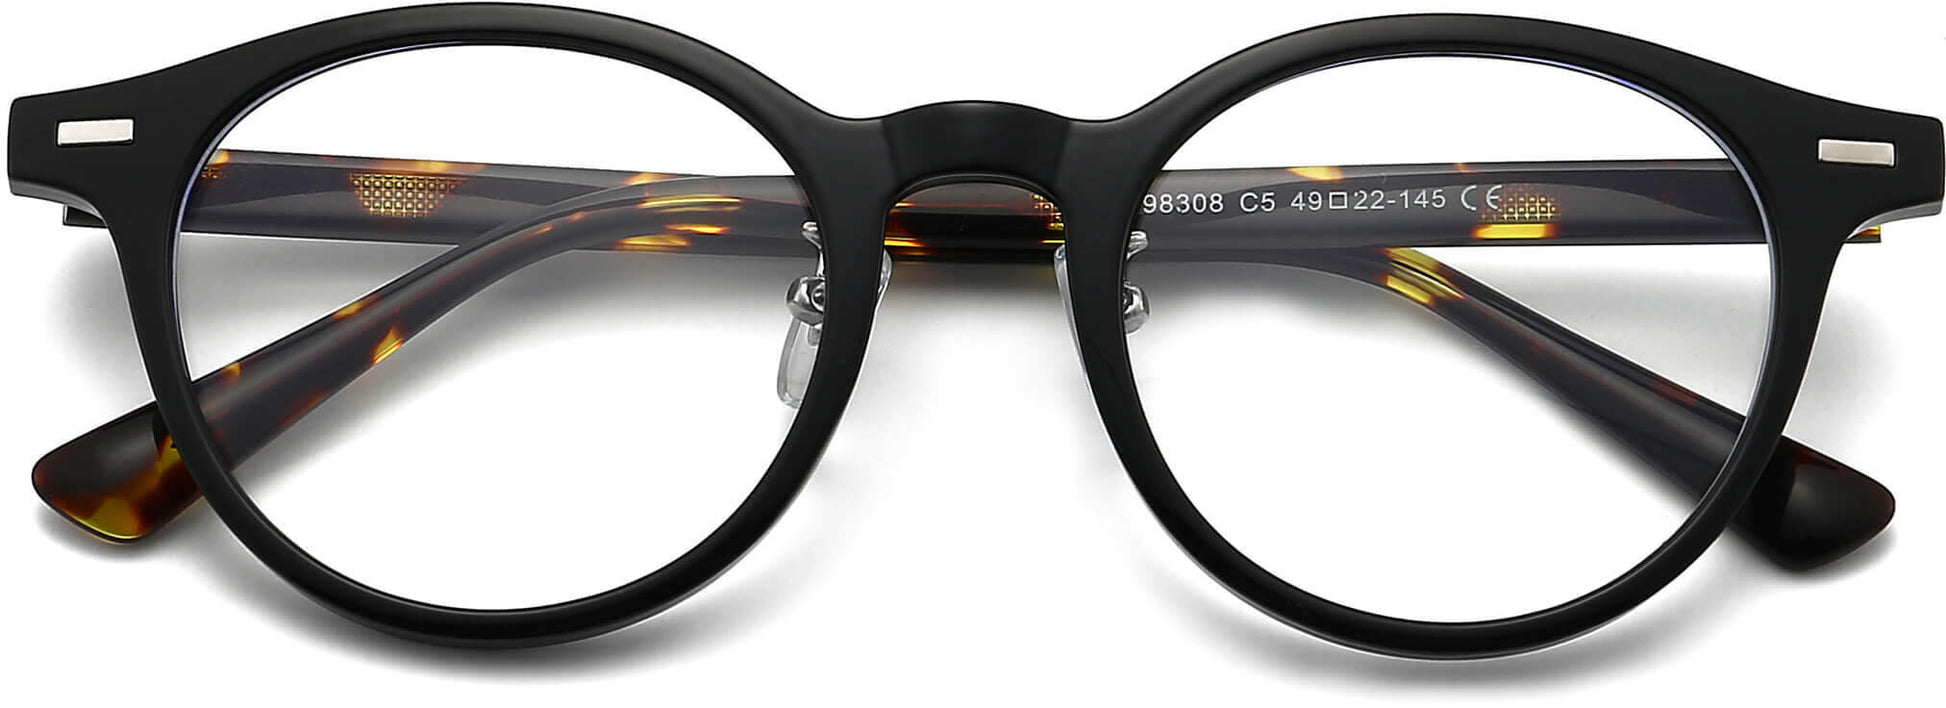 Nova Round Black Eyeglasses from ANRRI, closed view